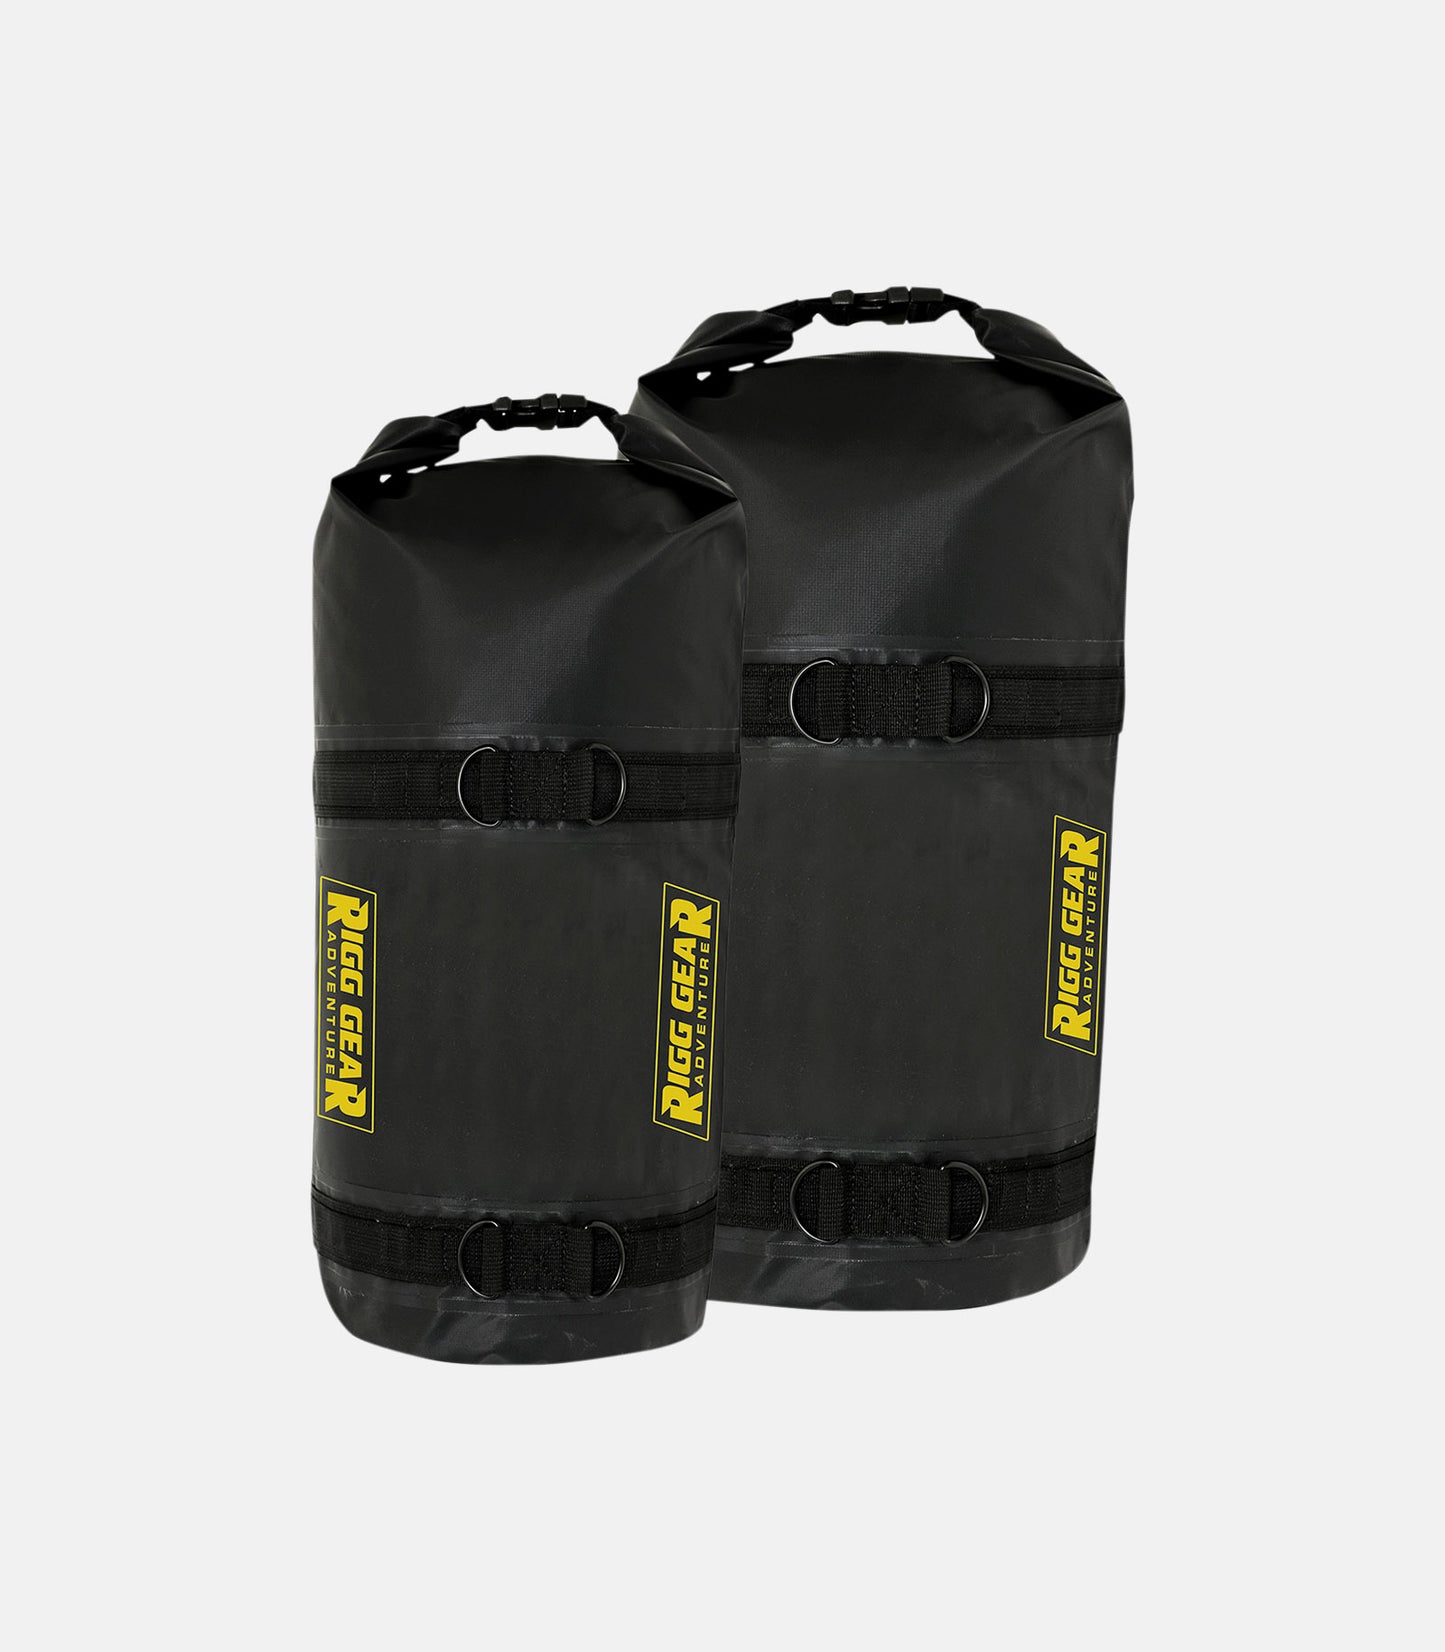 NELSON RIGG Adventure Dry Roll Bag - 30 liter - Black